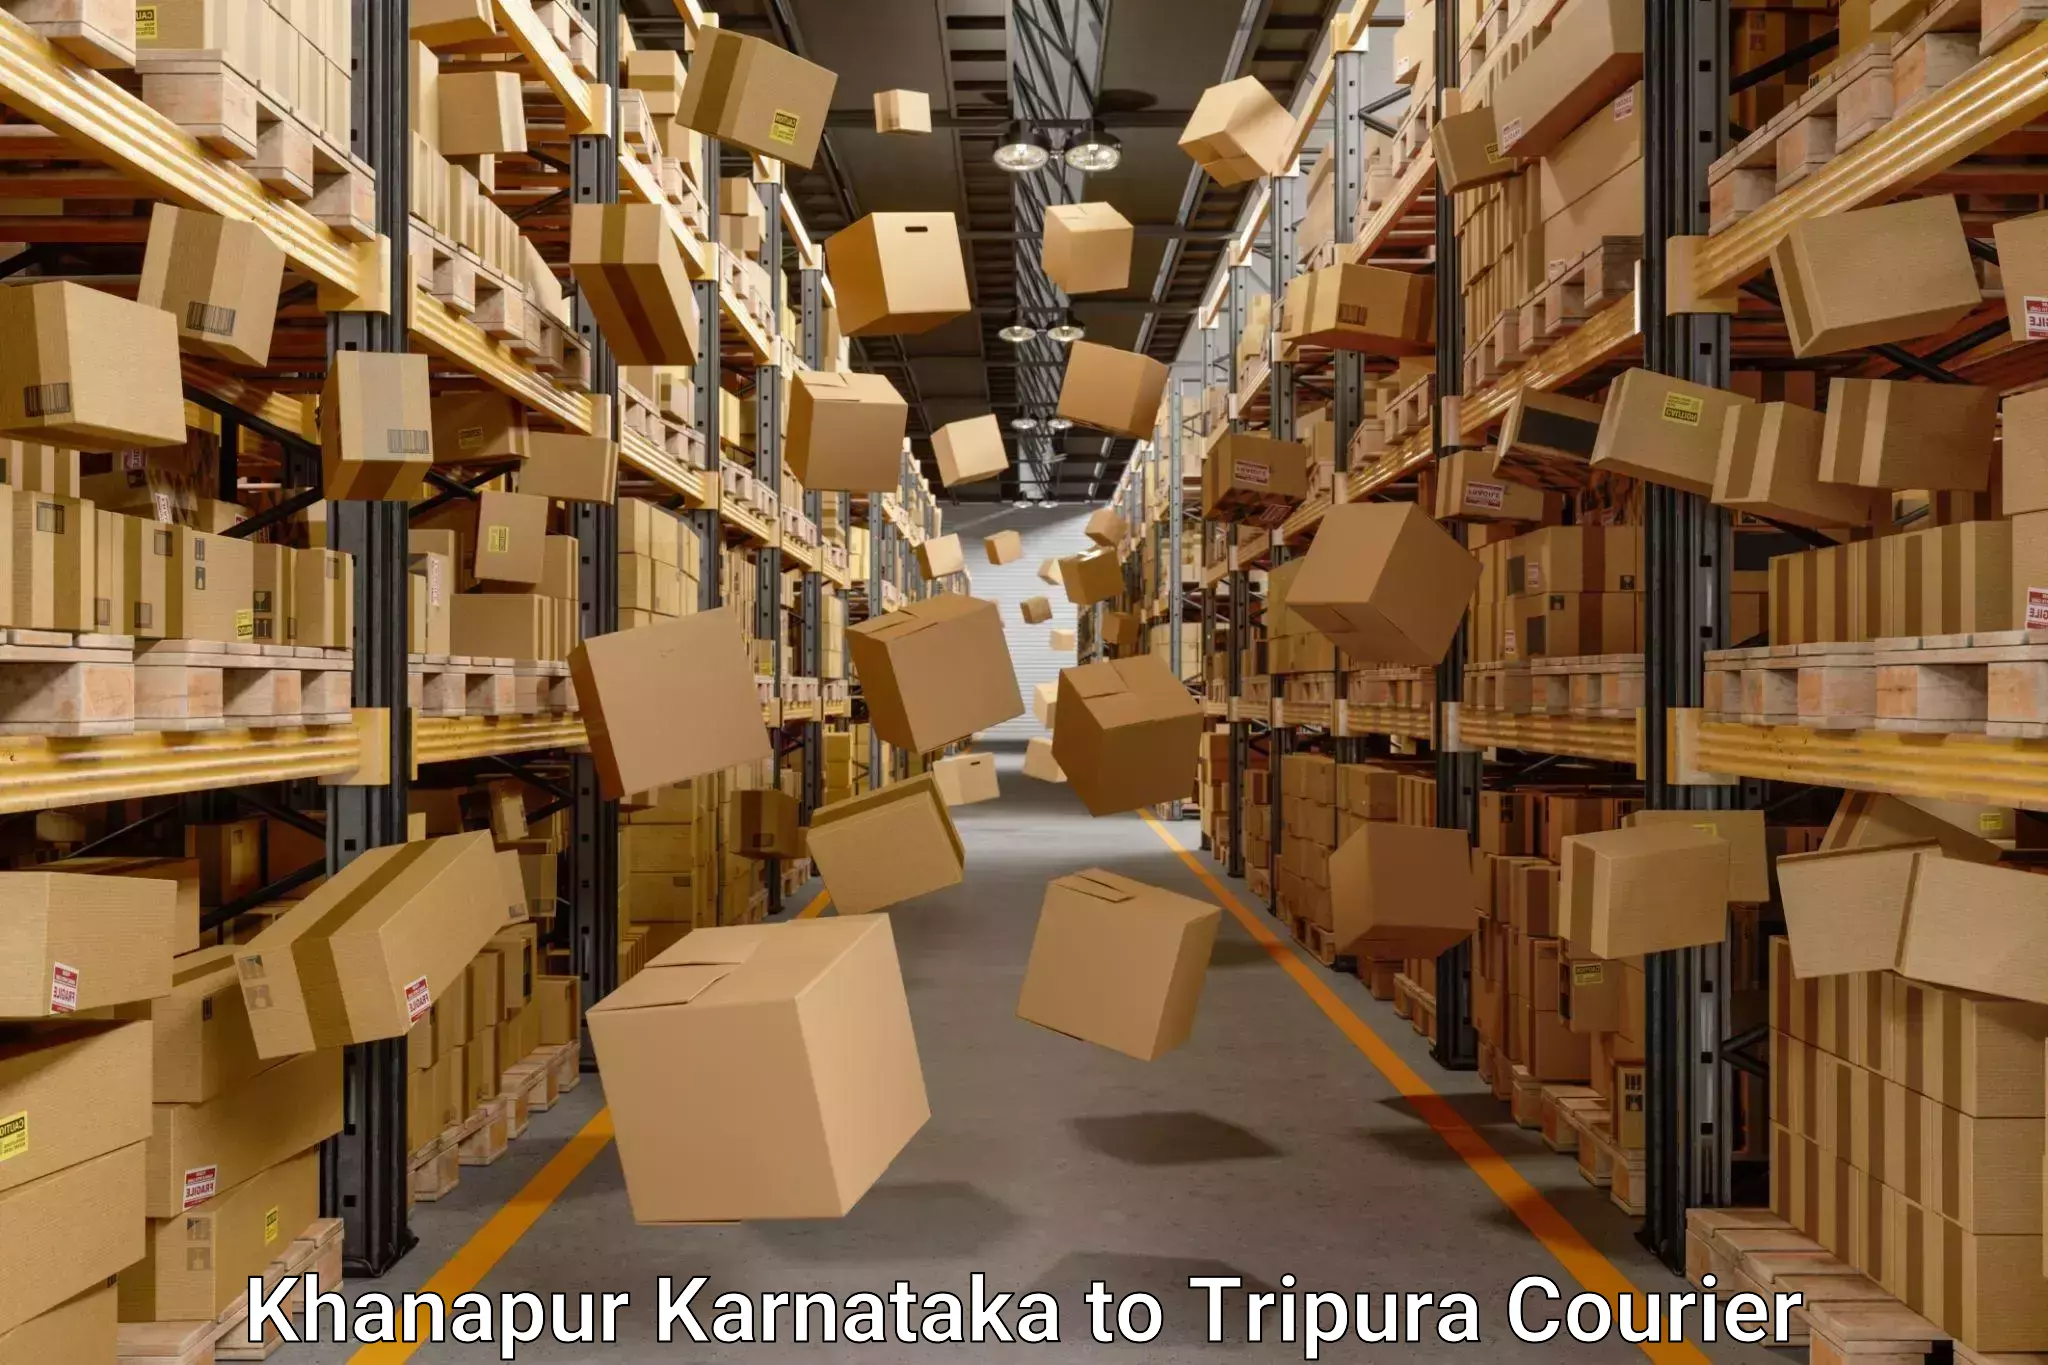 High-quality moving services Khanapur Karnataka to Udaipur Tripura